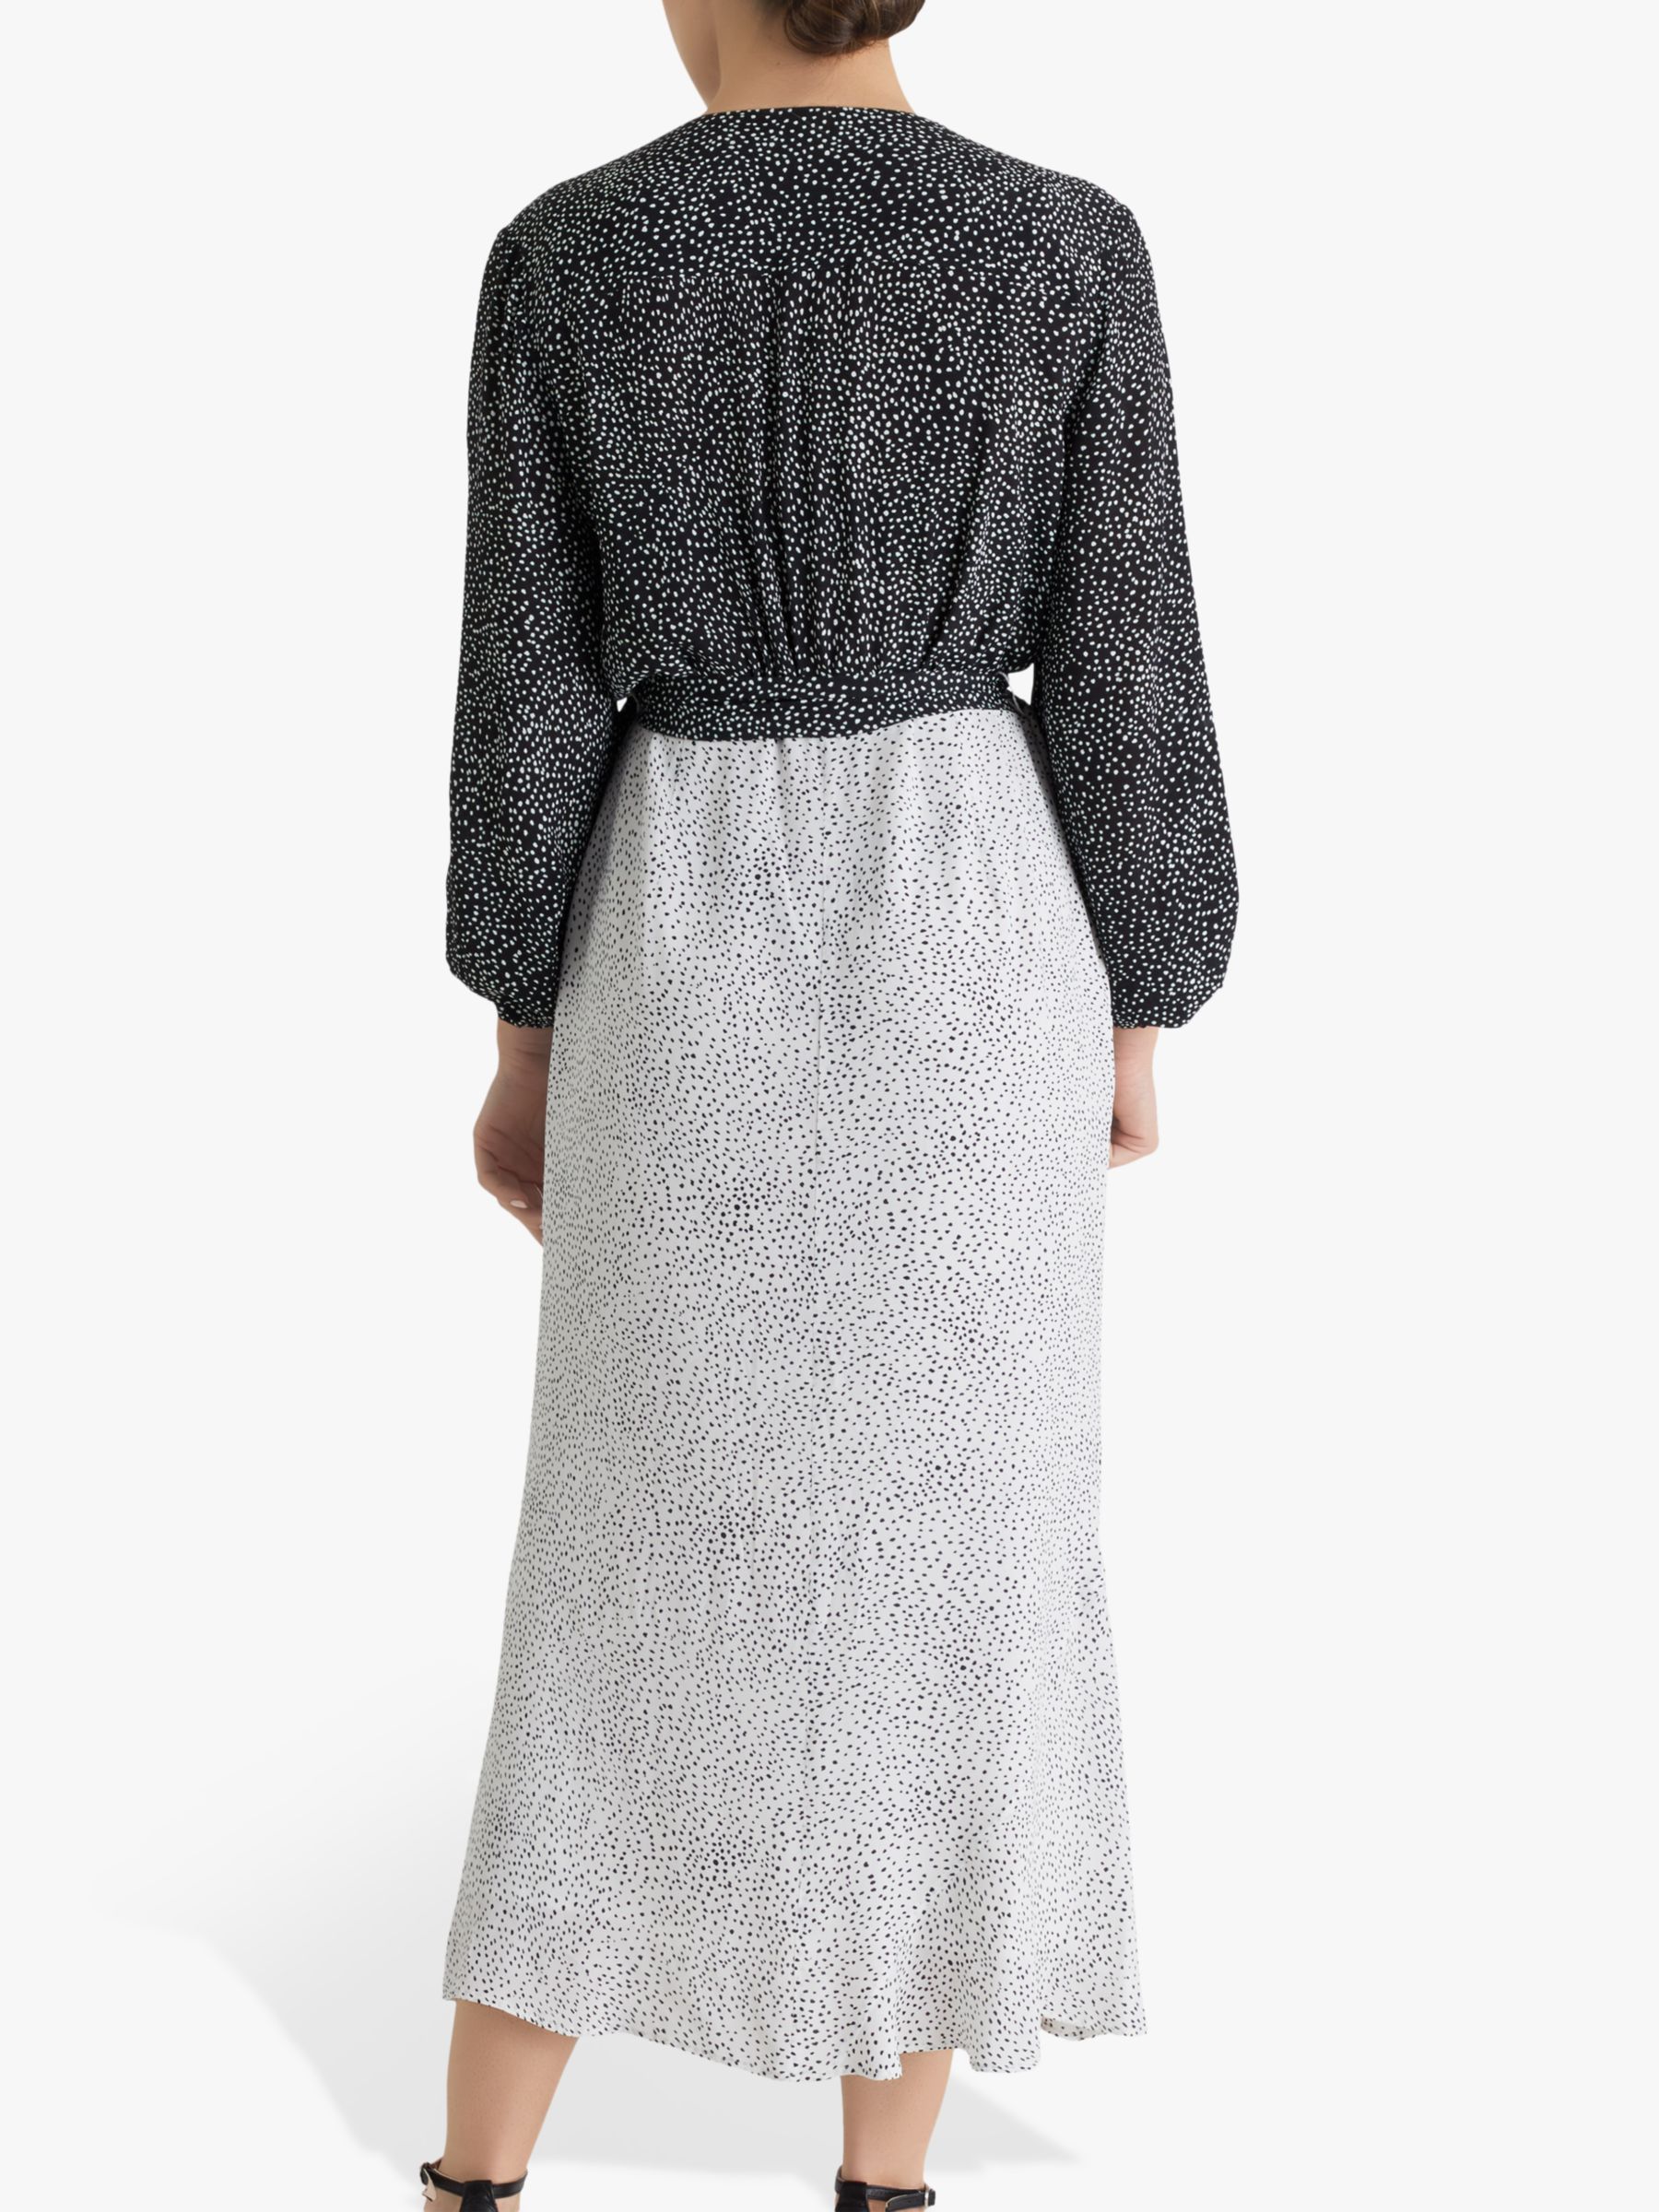 Fenn Wright Manson Petite Ninette Spotted Midi Dress, Black/Ivory